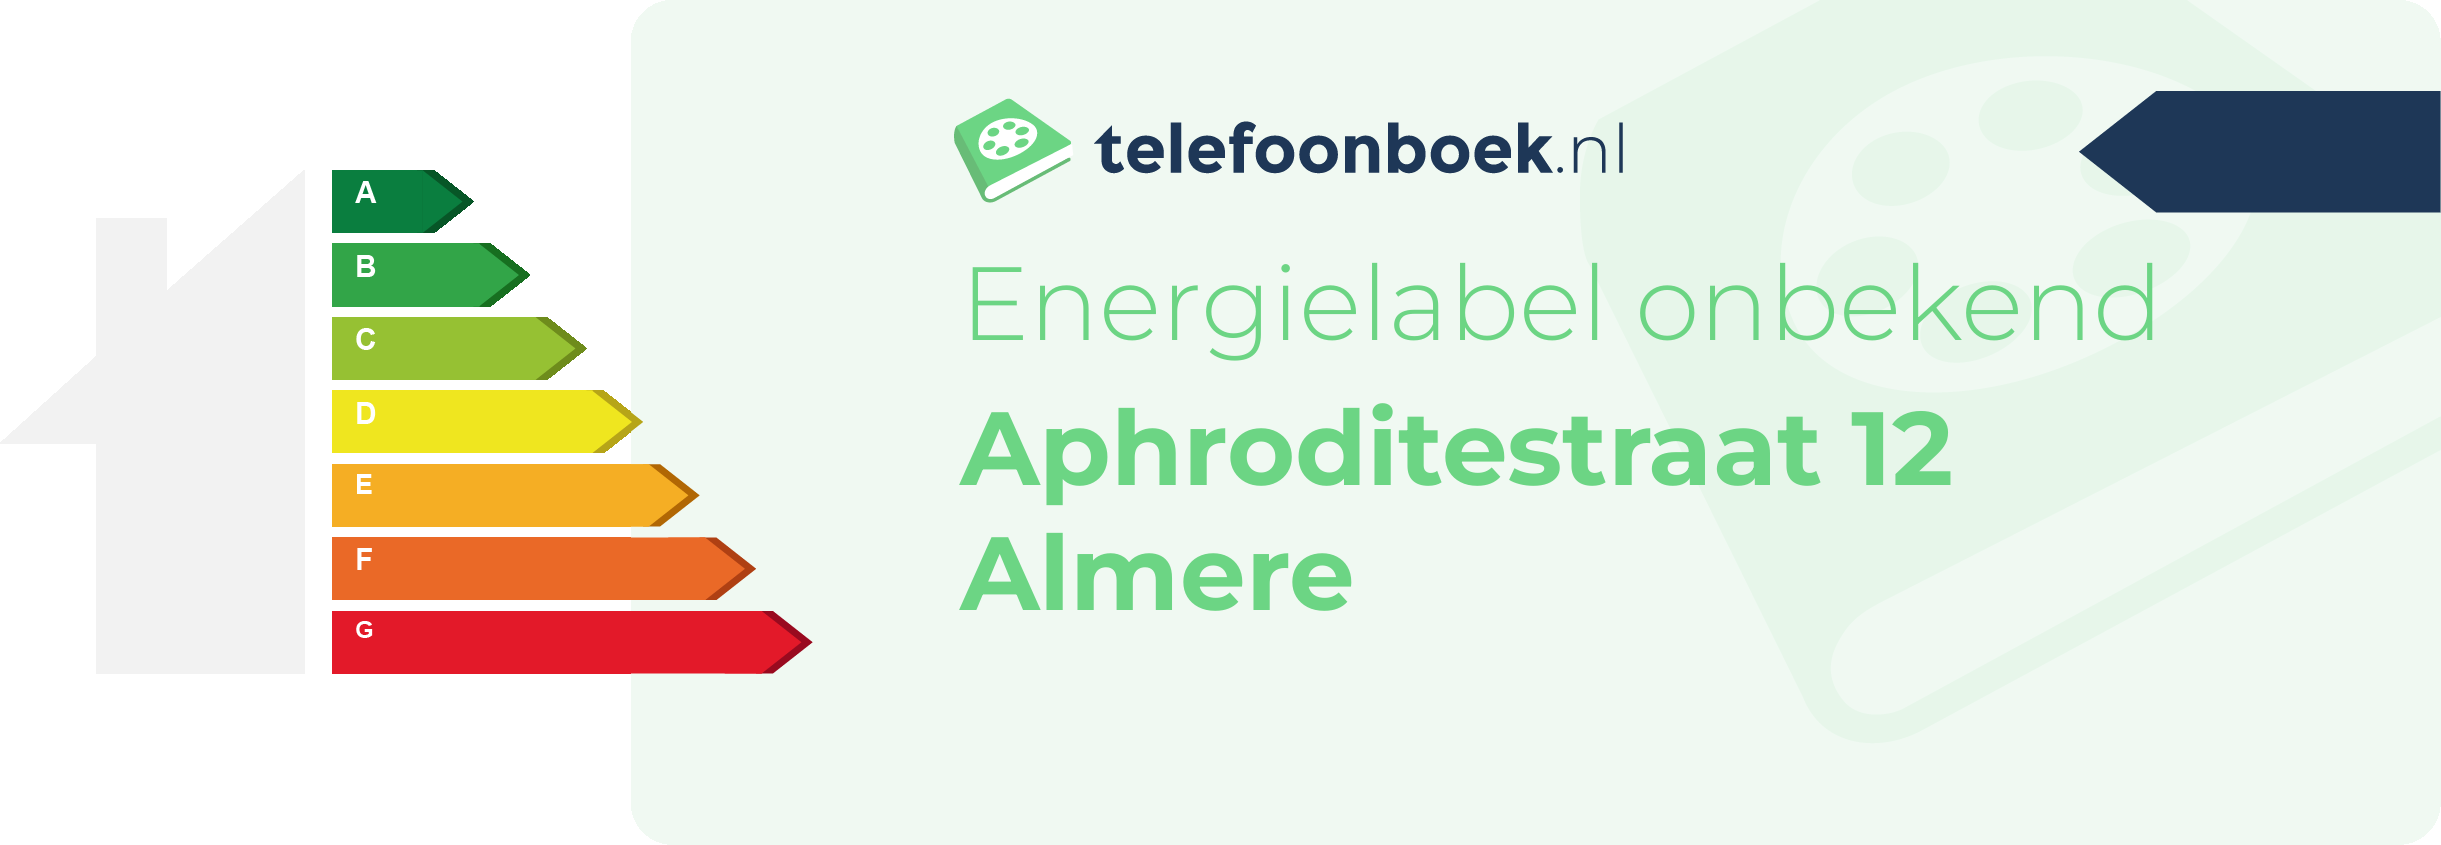 Energielabel Aphroditestraat 12 Almere